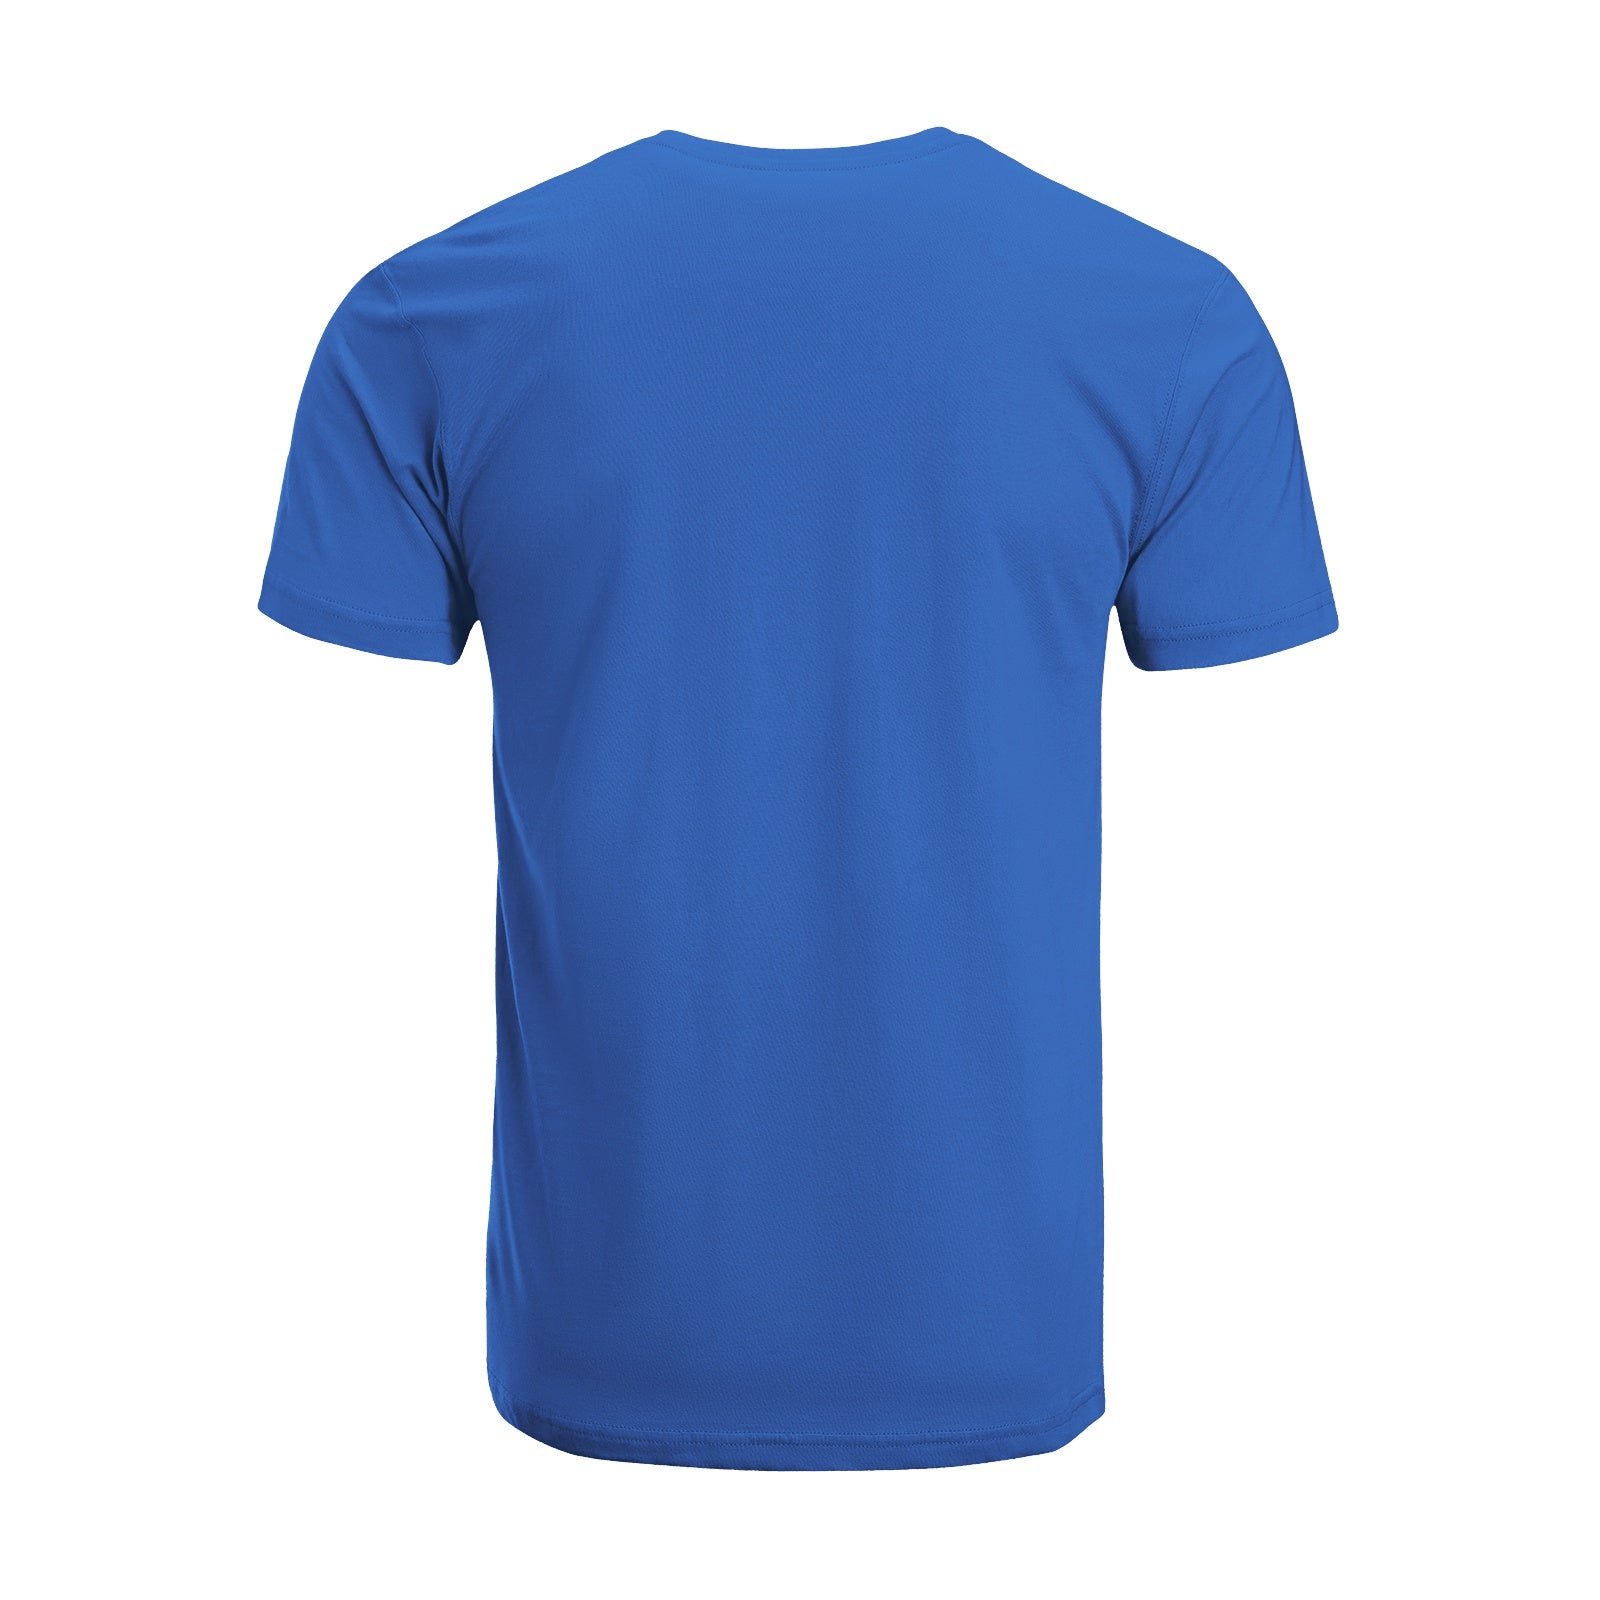 Unisex Short Sleeve Crew Neck Cotton Jersey T-Shirt Gym No. 14 - Tara-Outfits.com